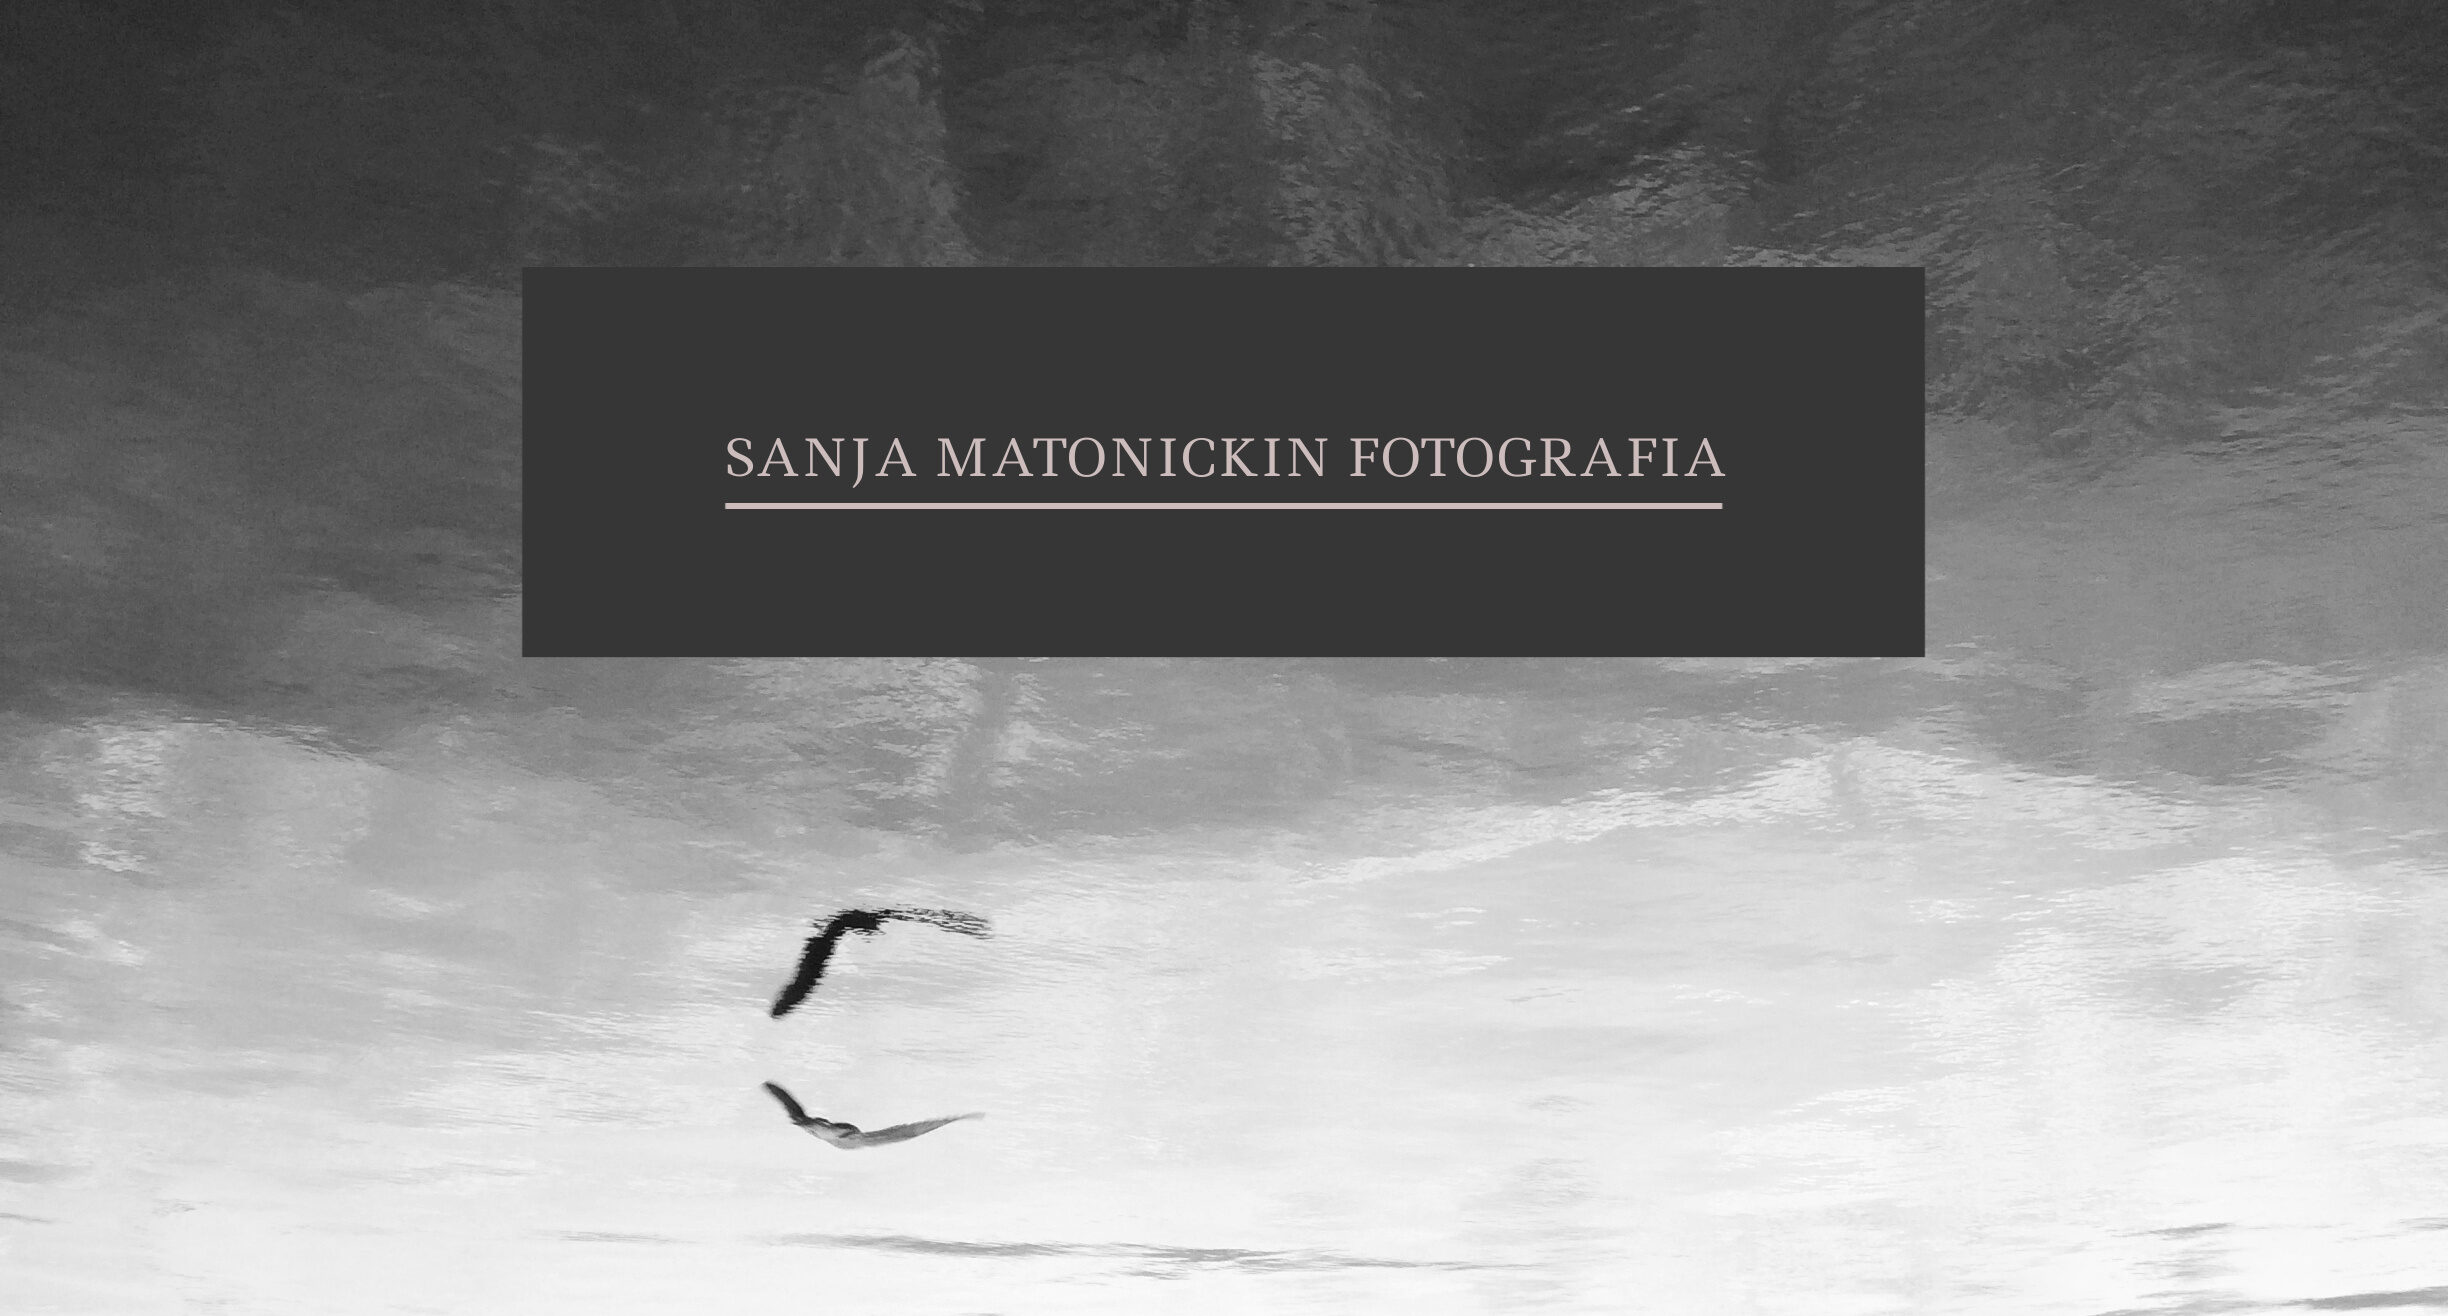 Sanja Matonickin